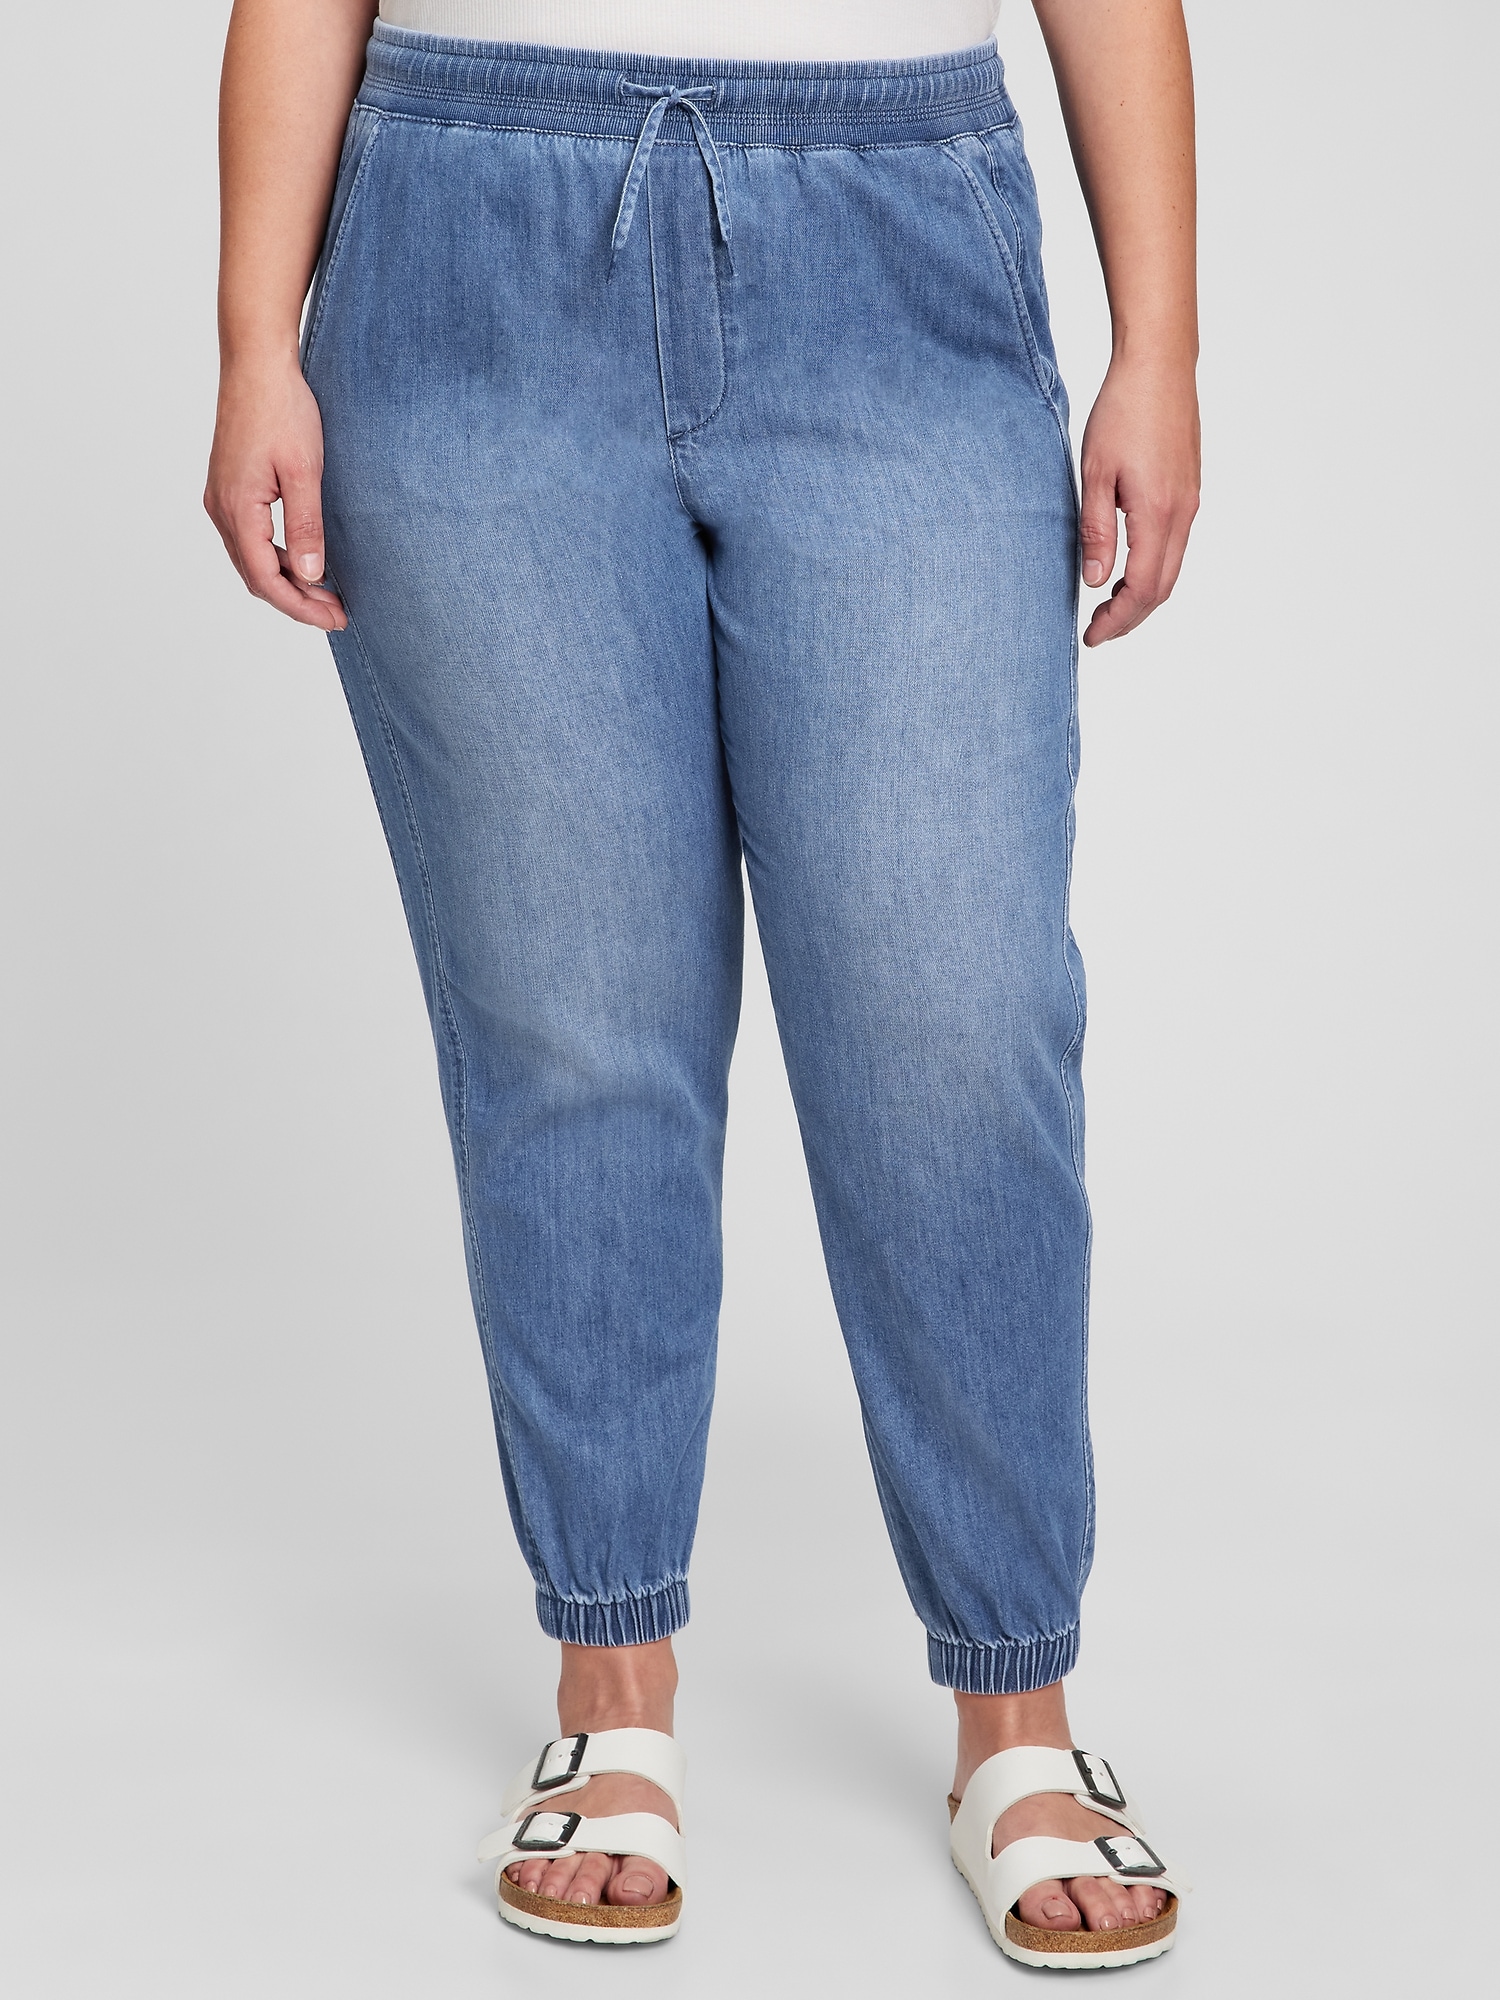 Women Denim Jogger, Jeans (free size for waist all sizes)(blue denim joggers  womens, plus